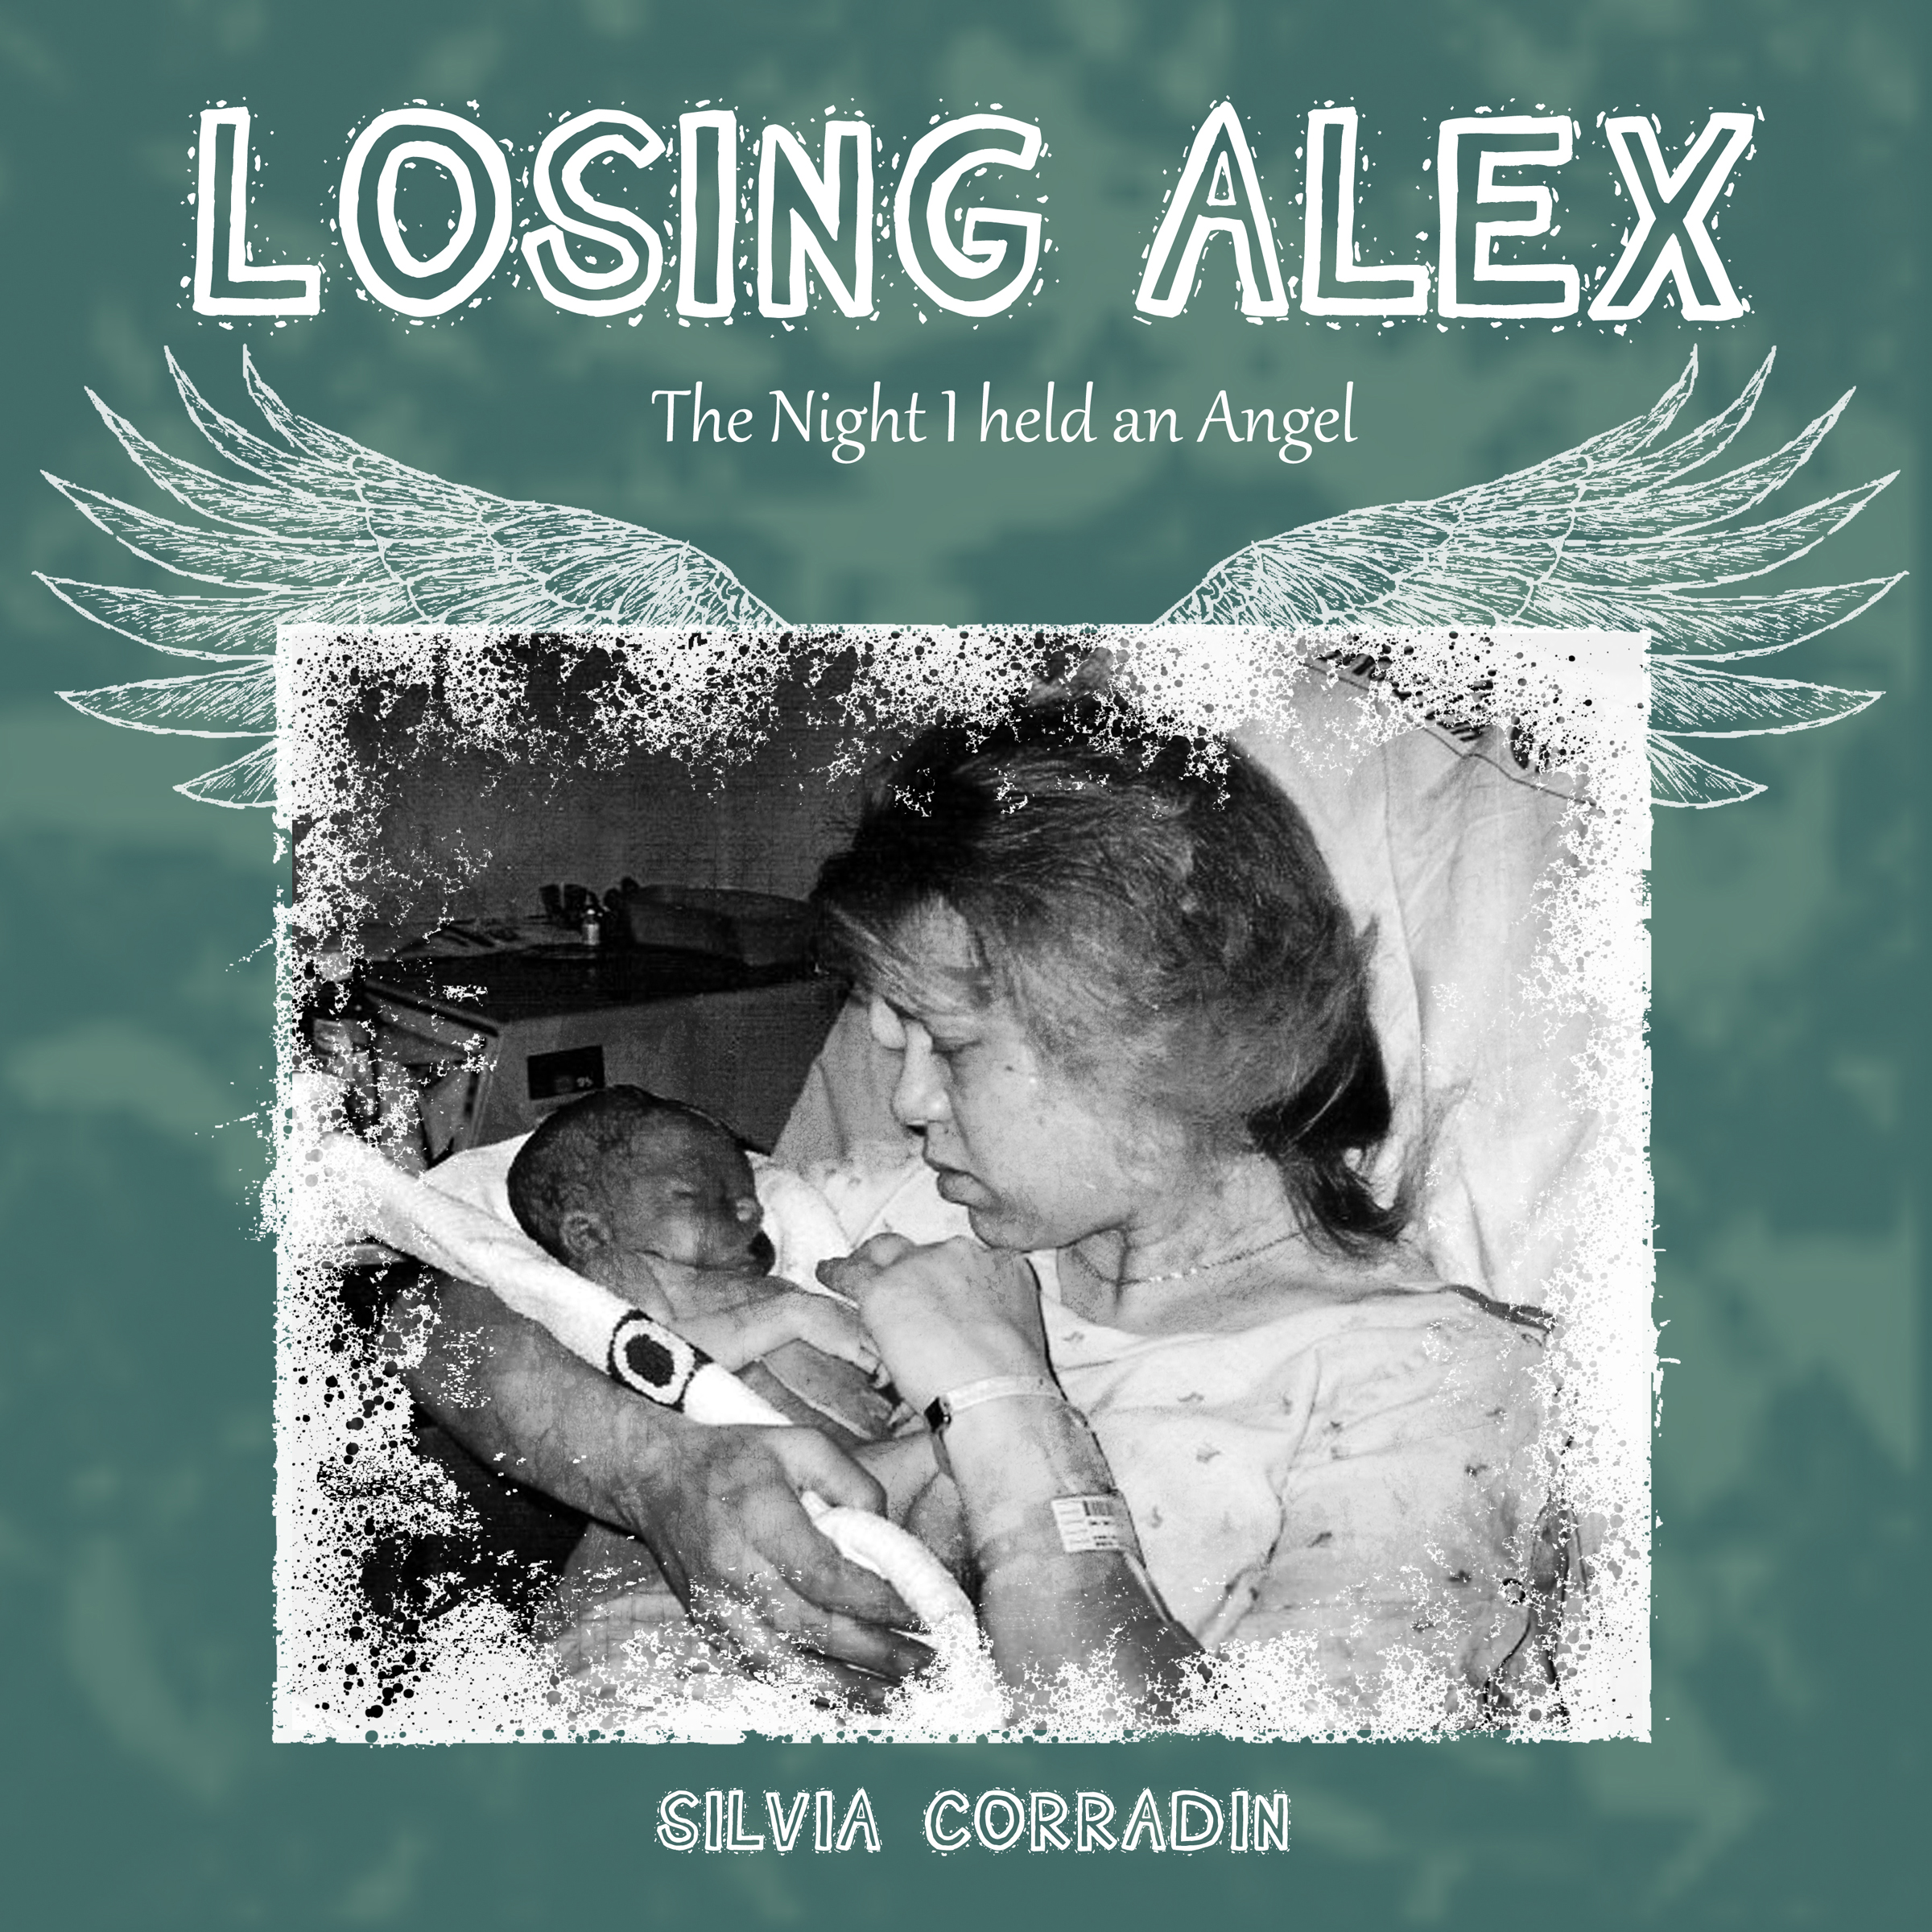 Book Trailer for my book "Losing Alex"